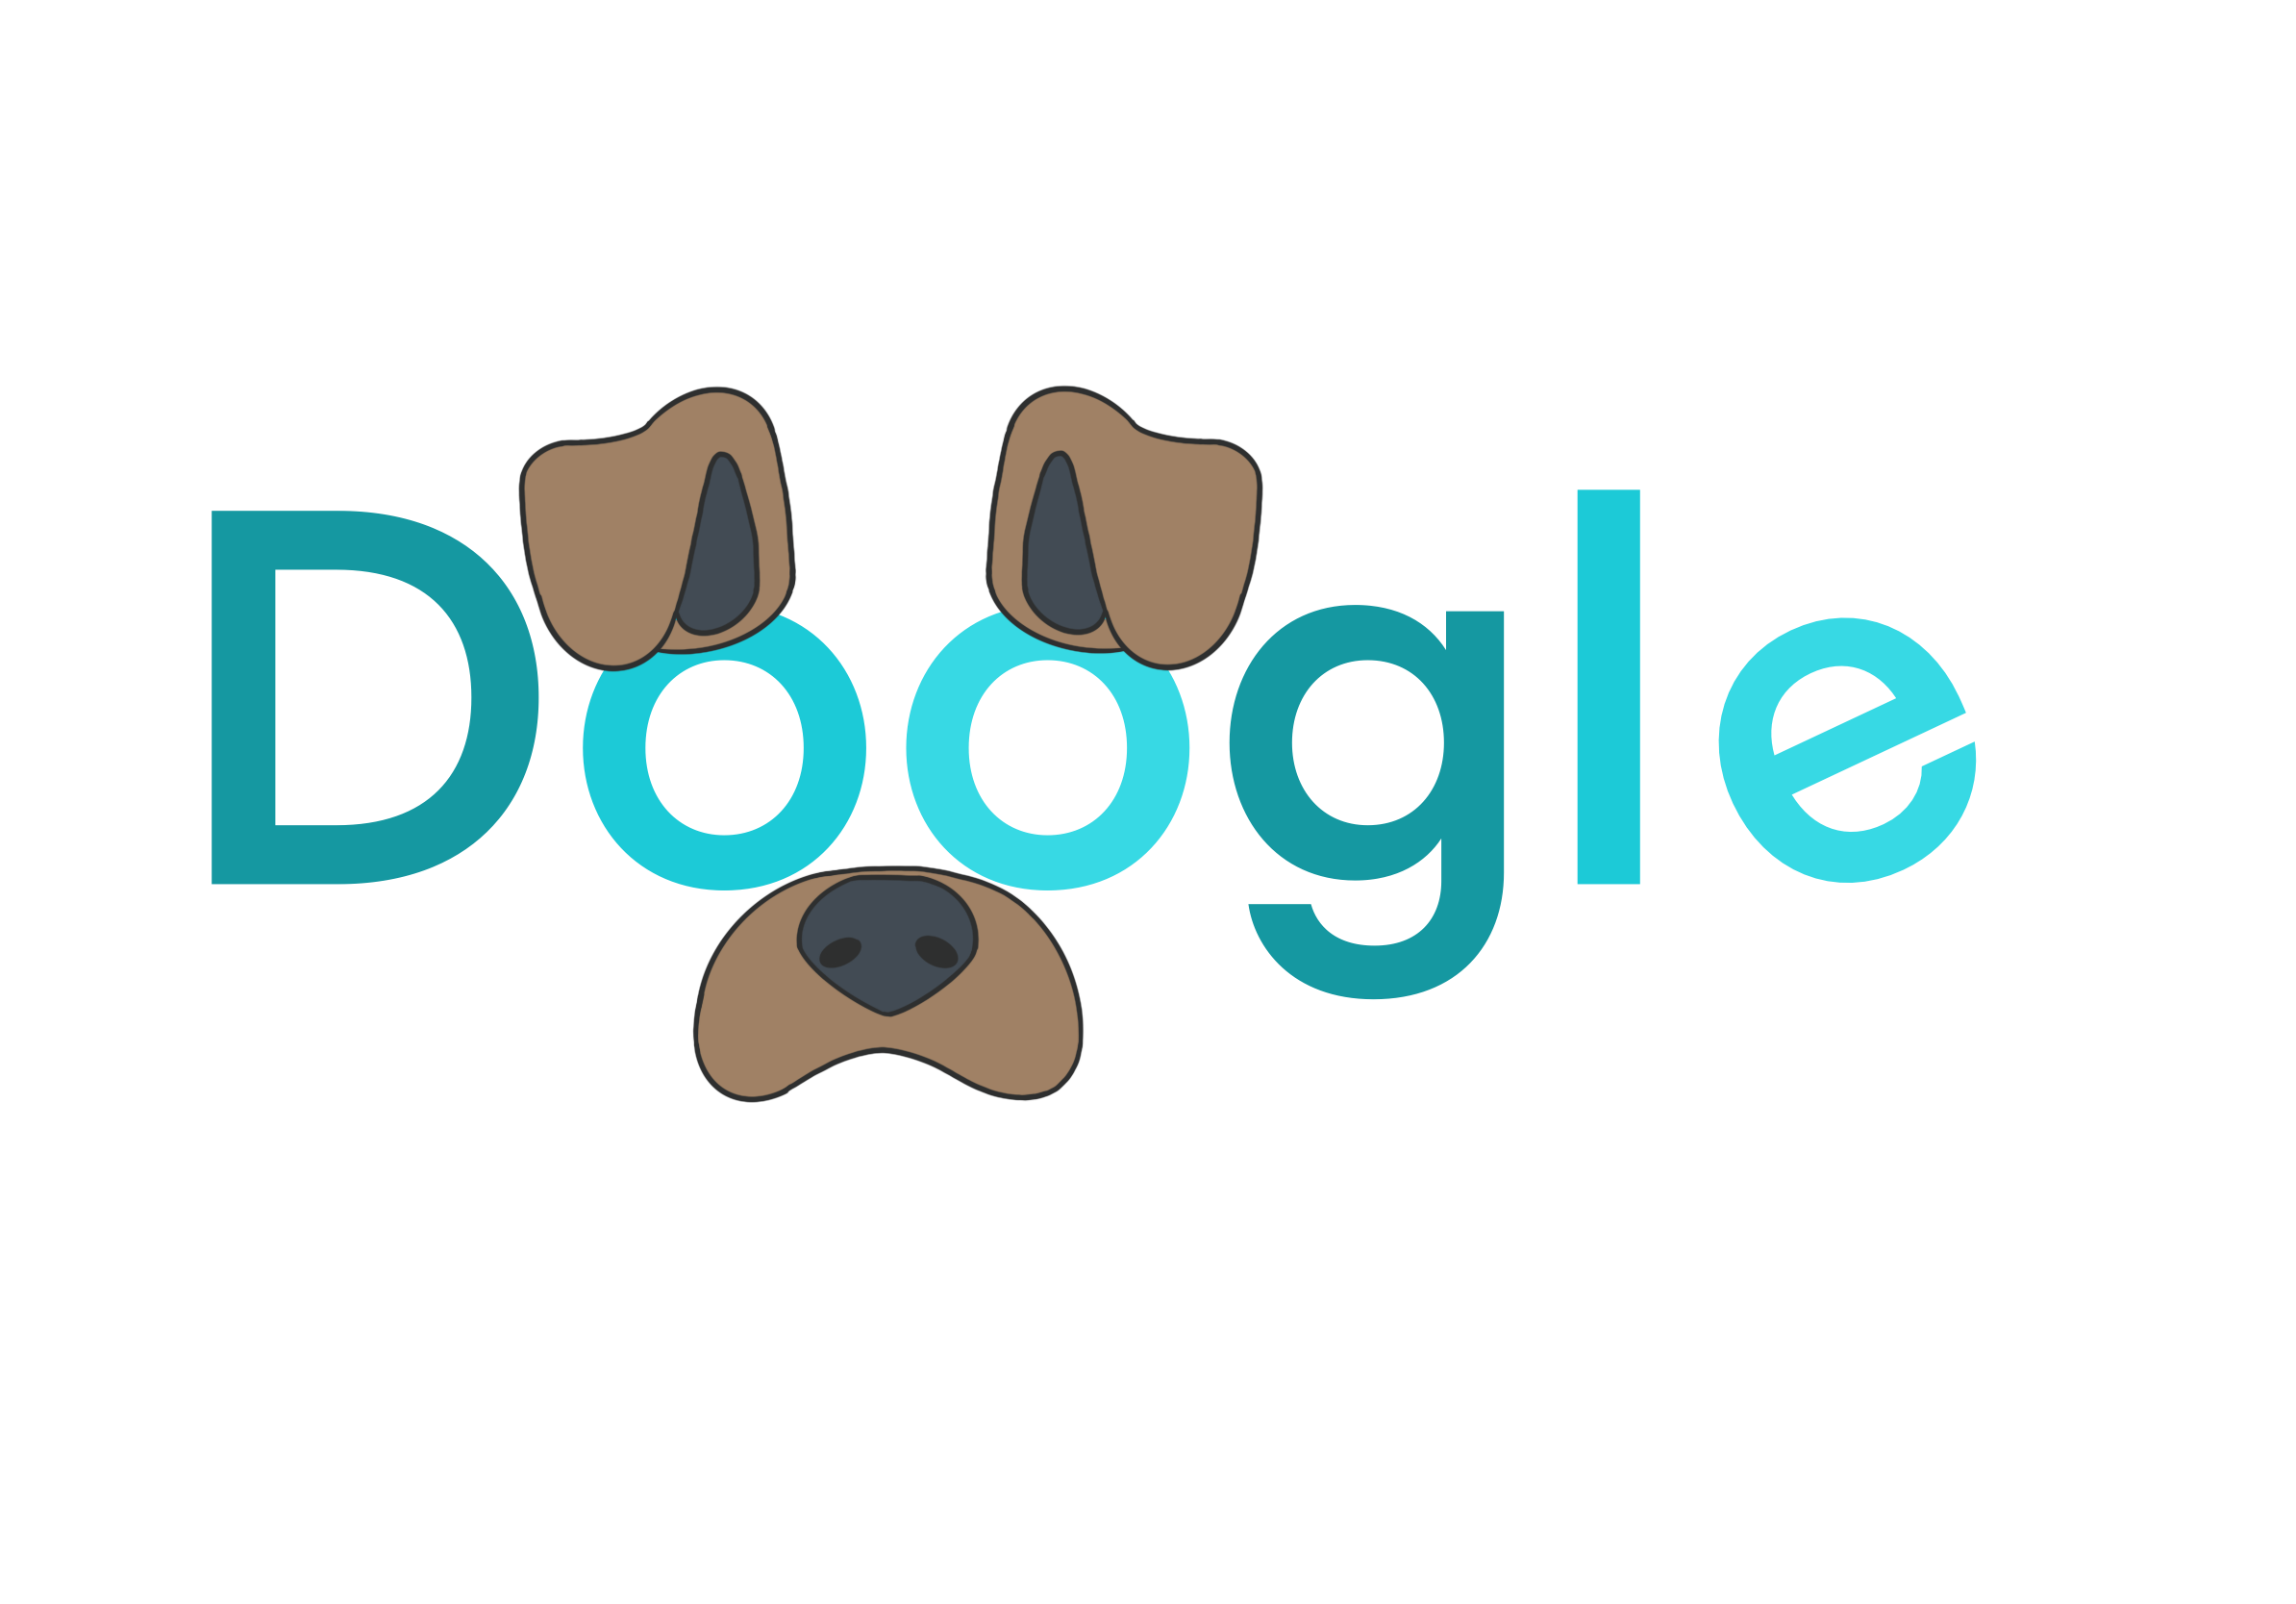 The logo of Doogle.